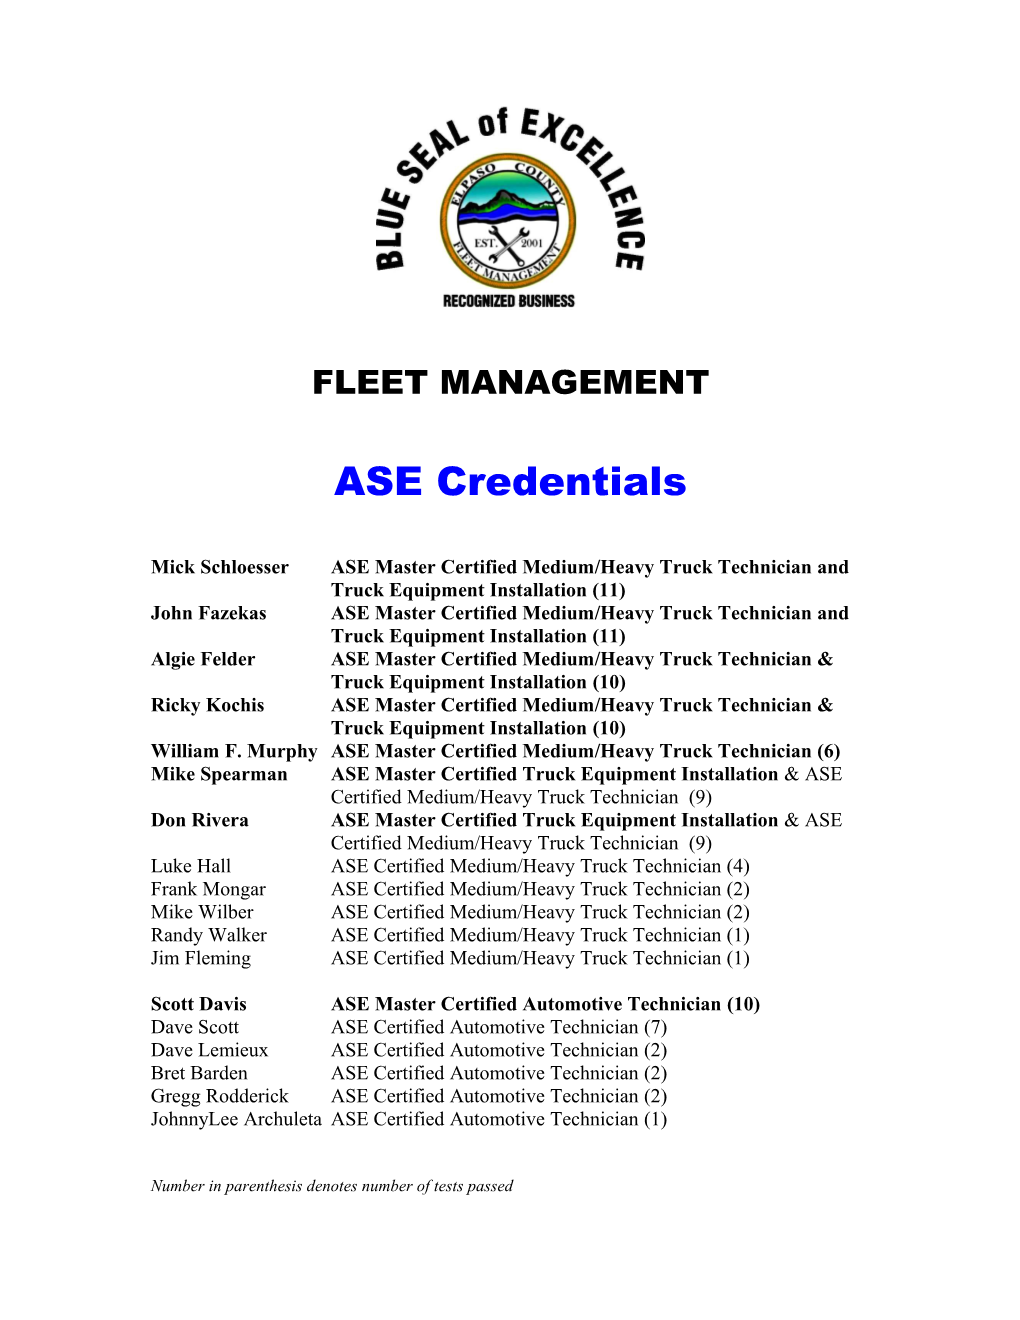 Mick Schloesser ASE Master Certified Medium/Heavy Truck Technician and Truck Equipment